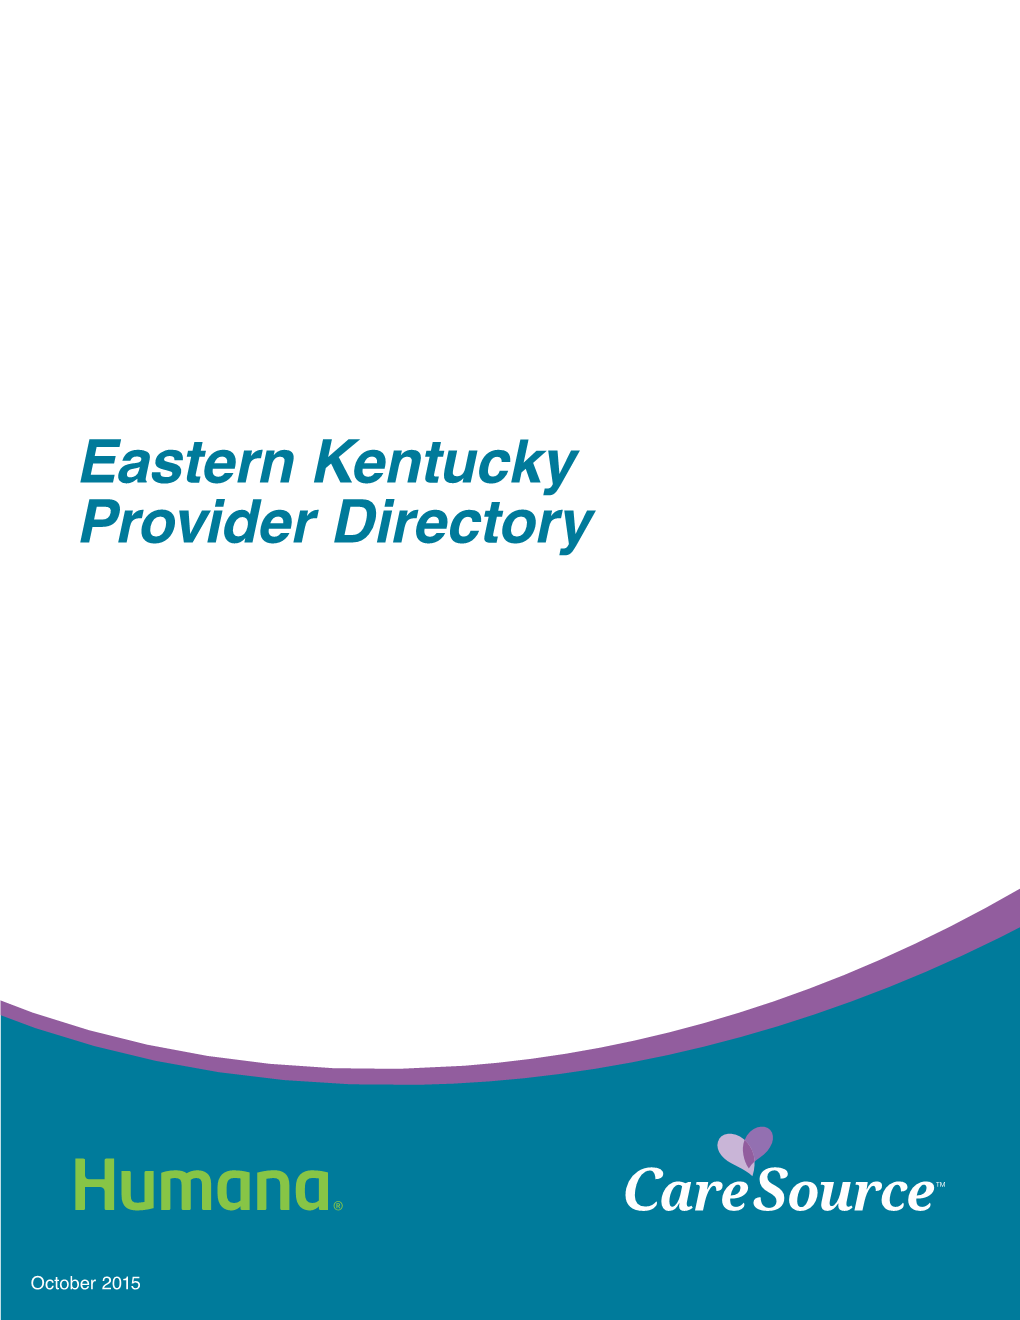 Eastern Kentucky Provider Directory